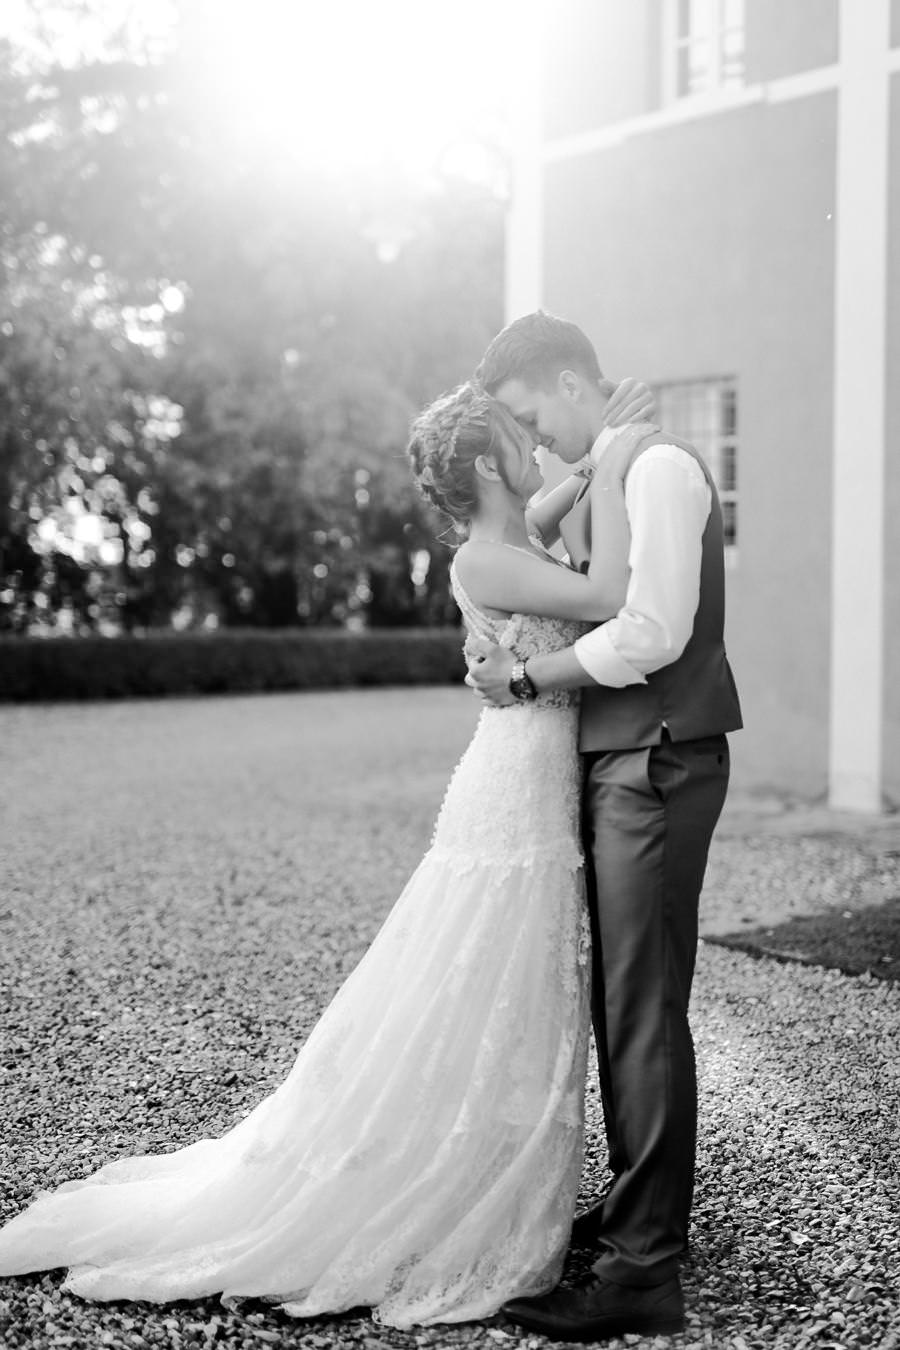 Hochzeit Toskana Blog | Heiraten in der Toskana in Italien | Hochzeitsfotograf Toskana Stefanie Reindl Photography | Wedding photographer Toscana Italy